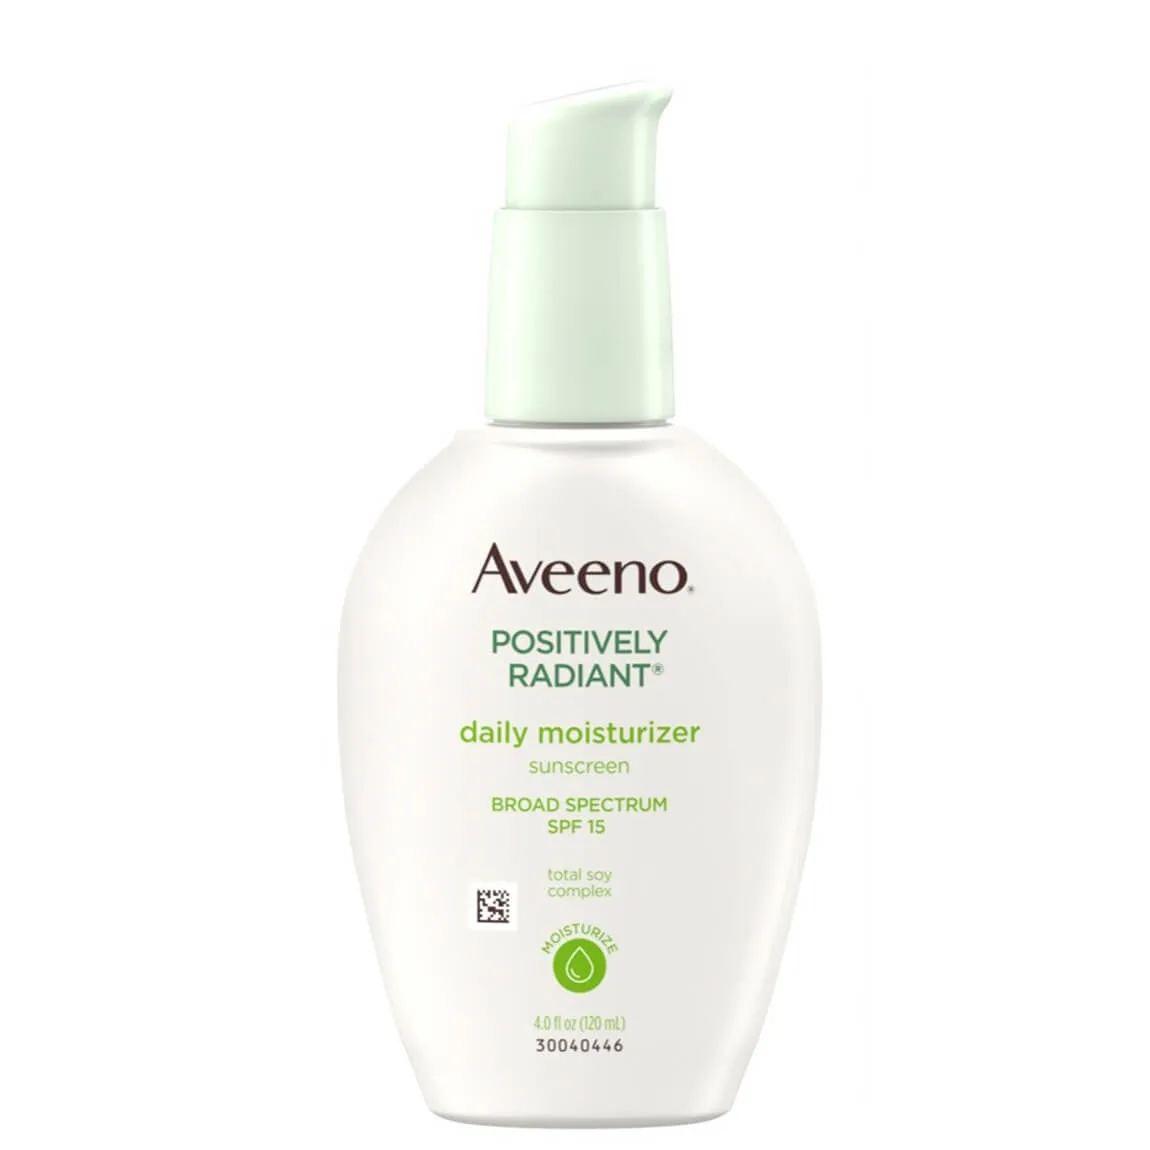 FEMMENORDIC's choice in Aveeno Positively Radiant vs Ultra Calming daily moisturizer comparison, Aveeno Positively Radiant Daily Face Moisturizer SPF 15